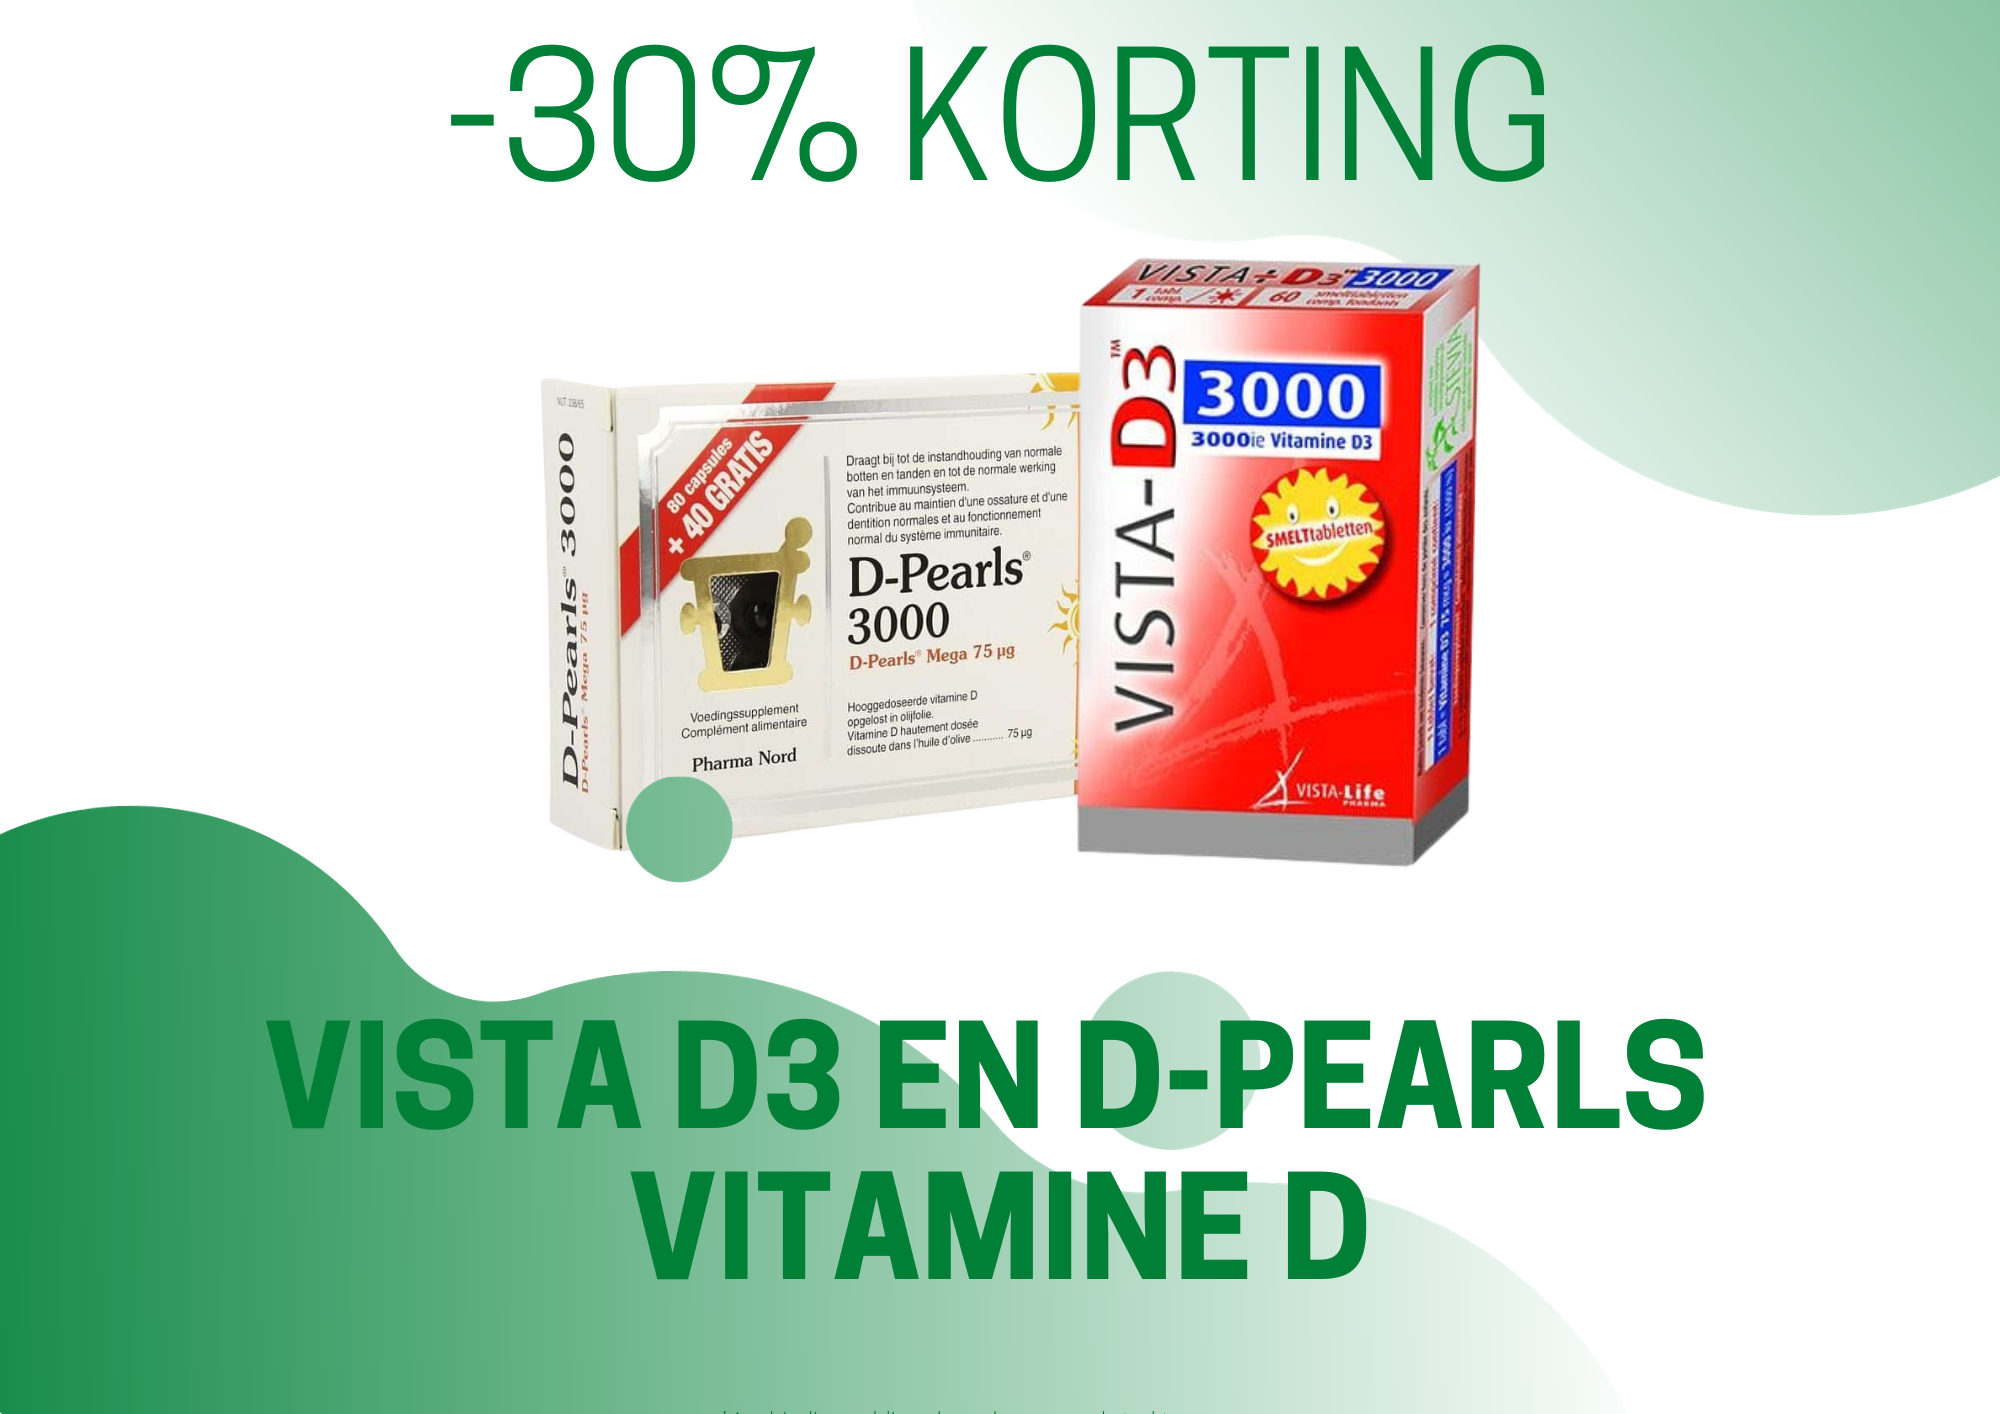 Promotie Vista D3 en D-Pearls vitamine D (liggend)